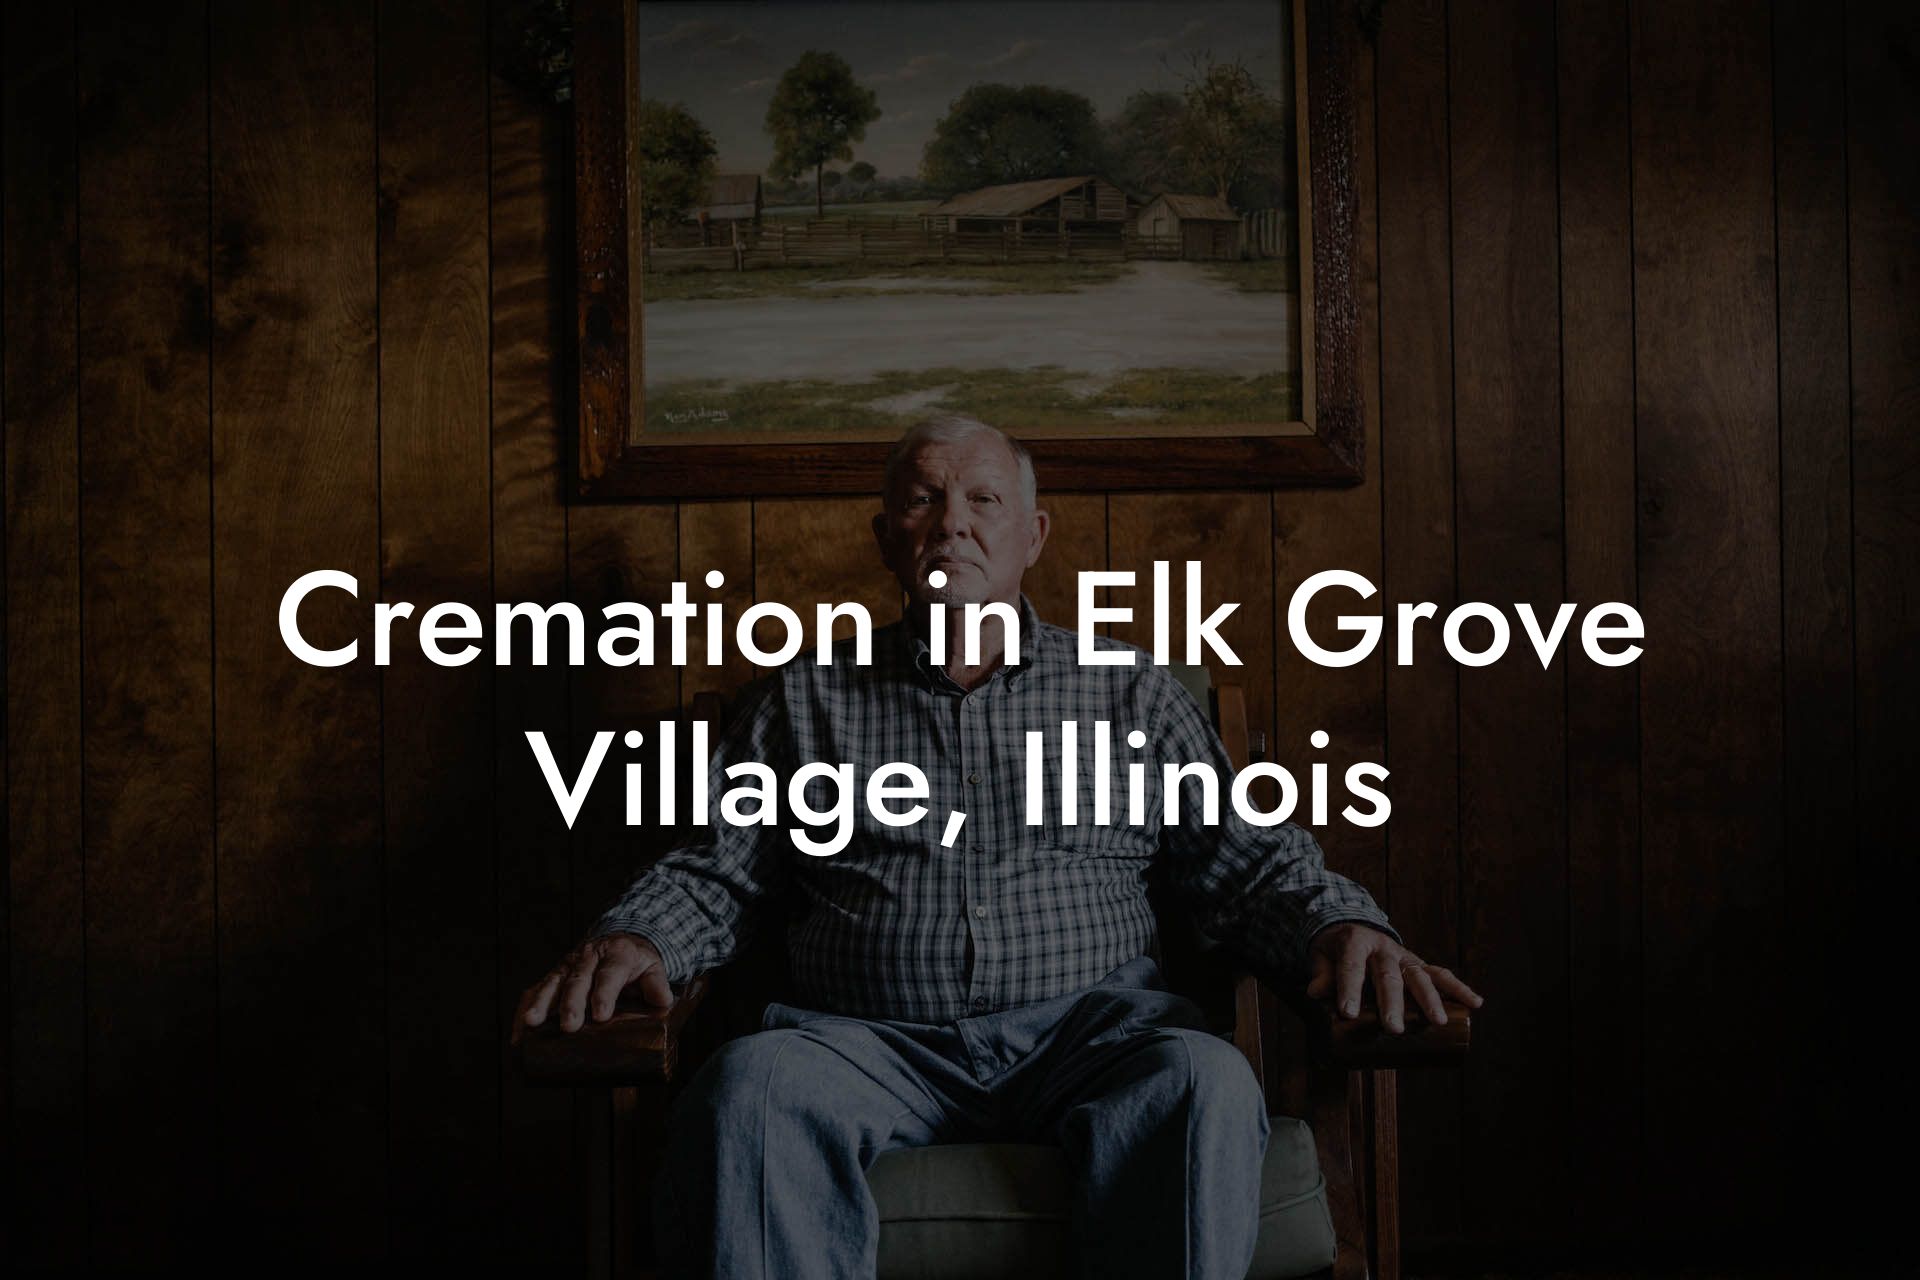 Cremation in Elk Grove Village, Illinois